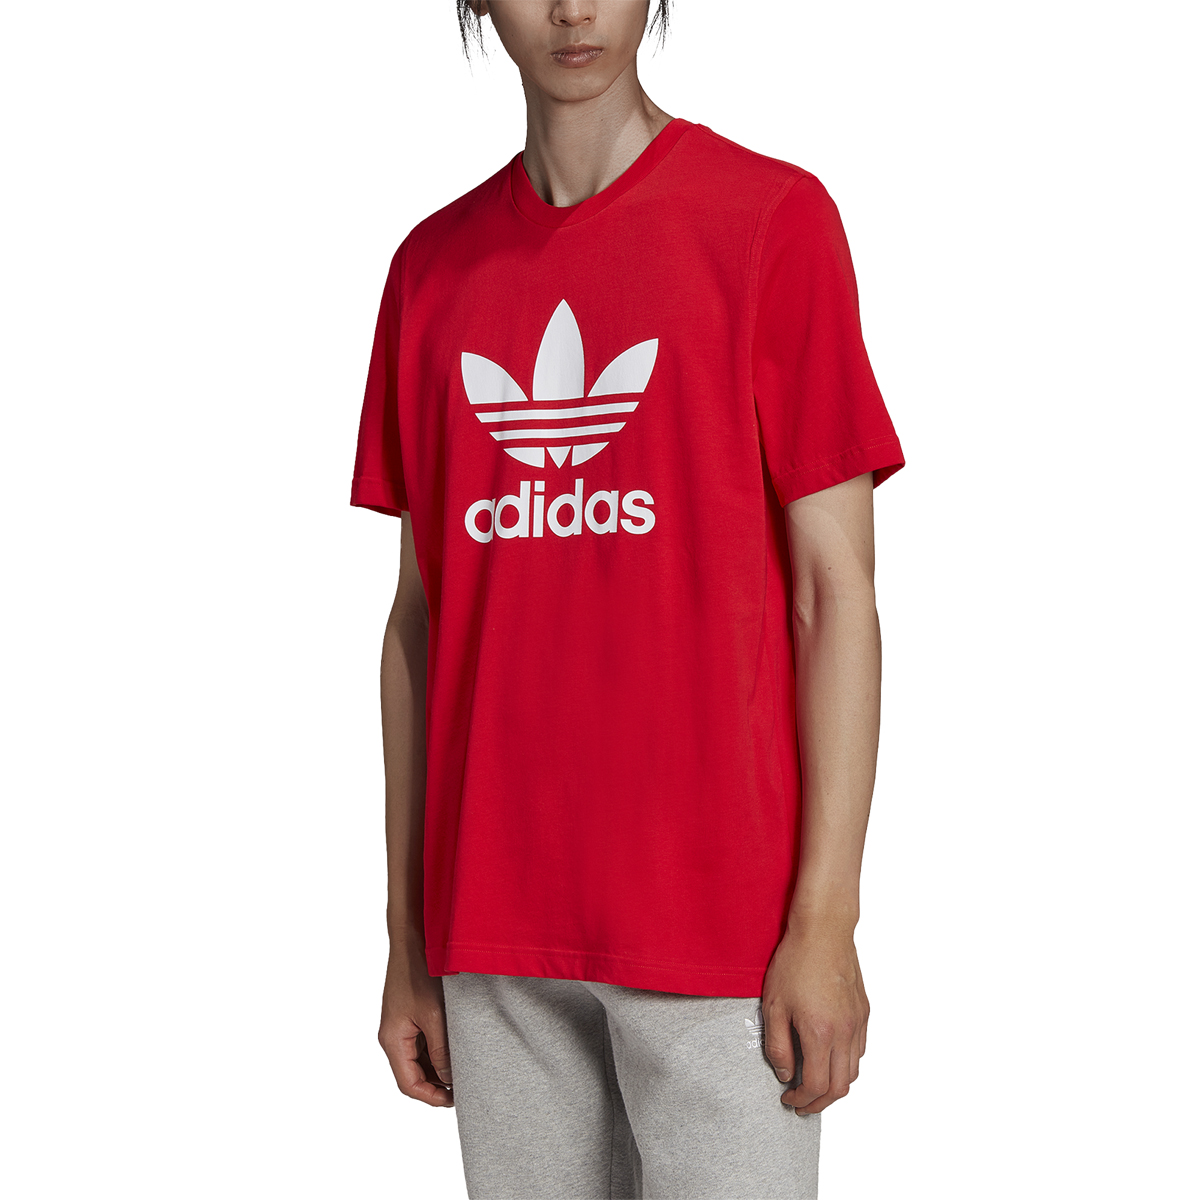 adidas-Originals-Trefoil-T-Shirt-Red